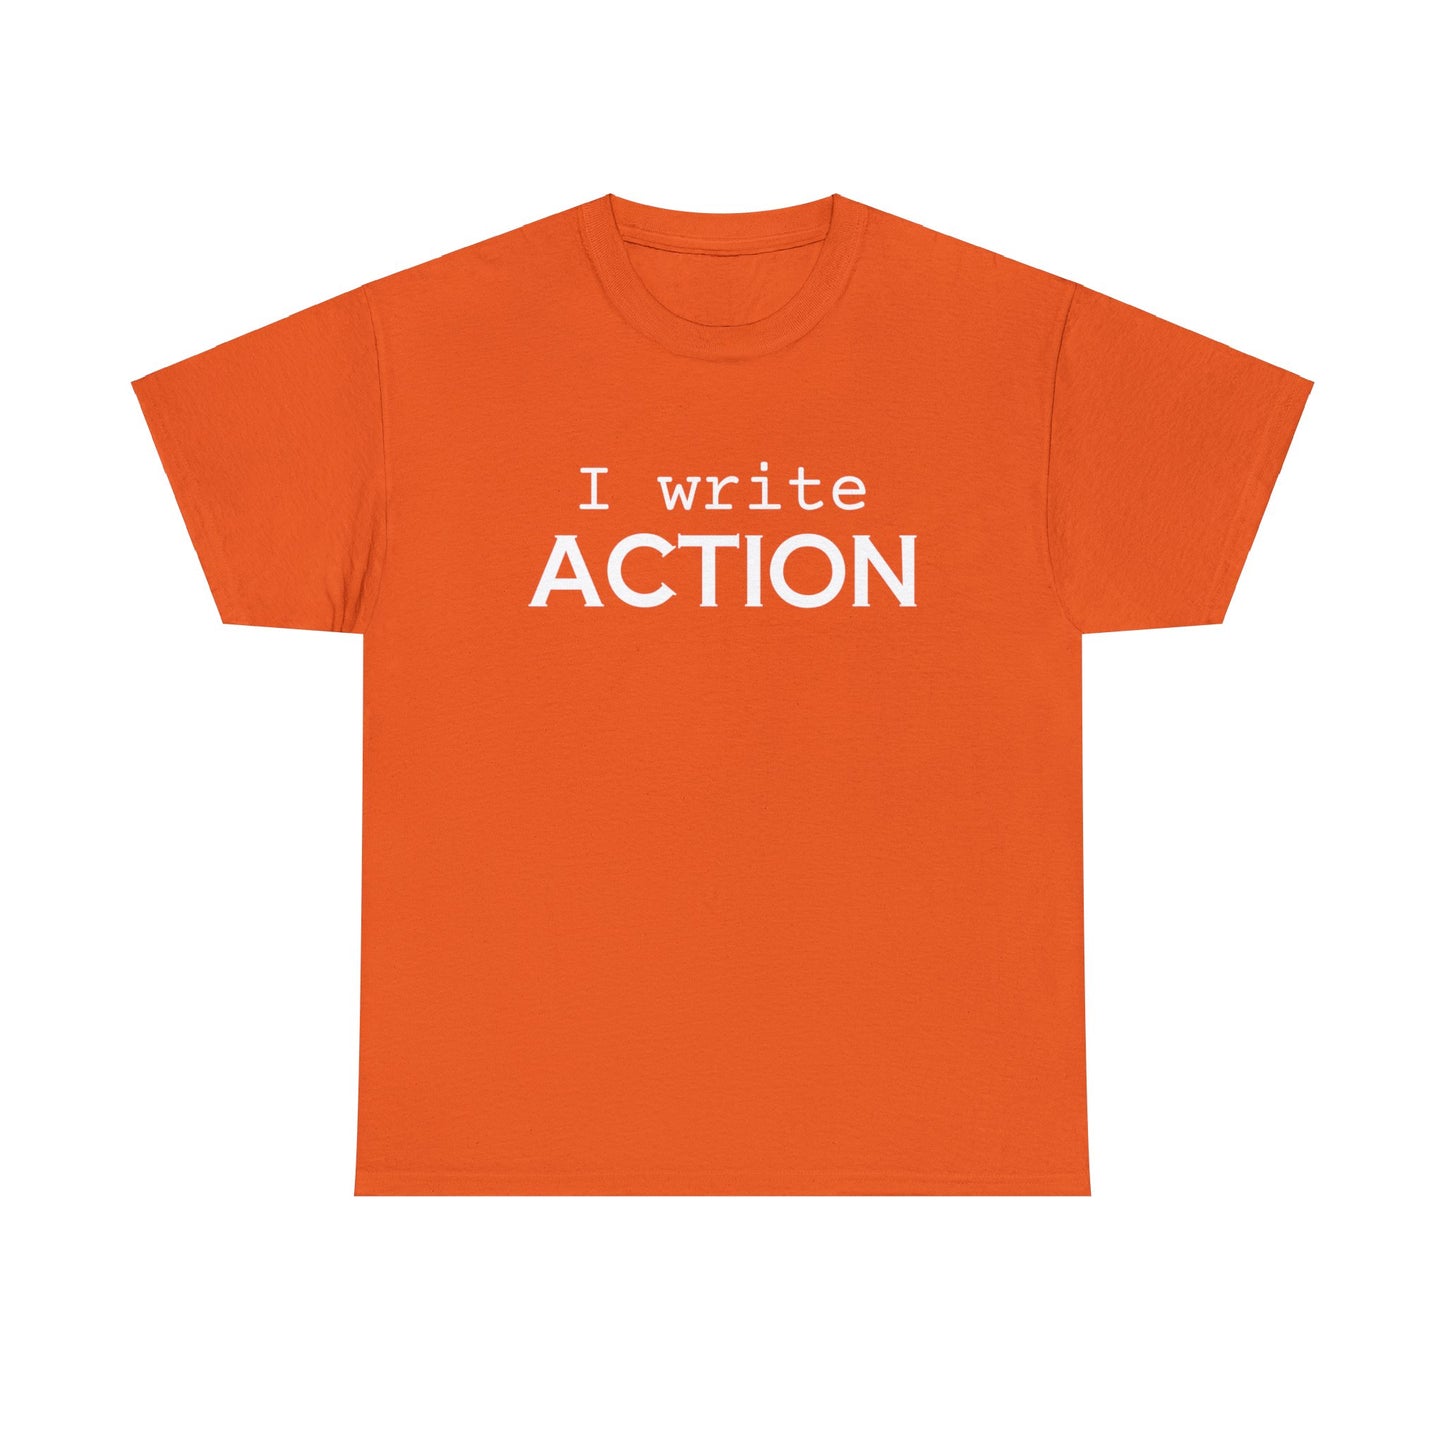 I write ACTION t-shirt